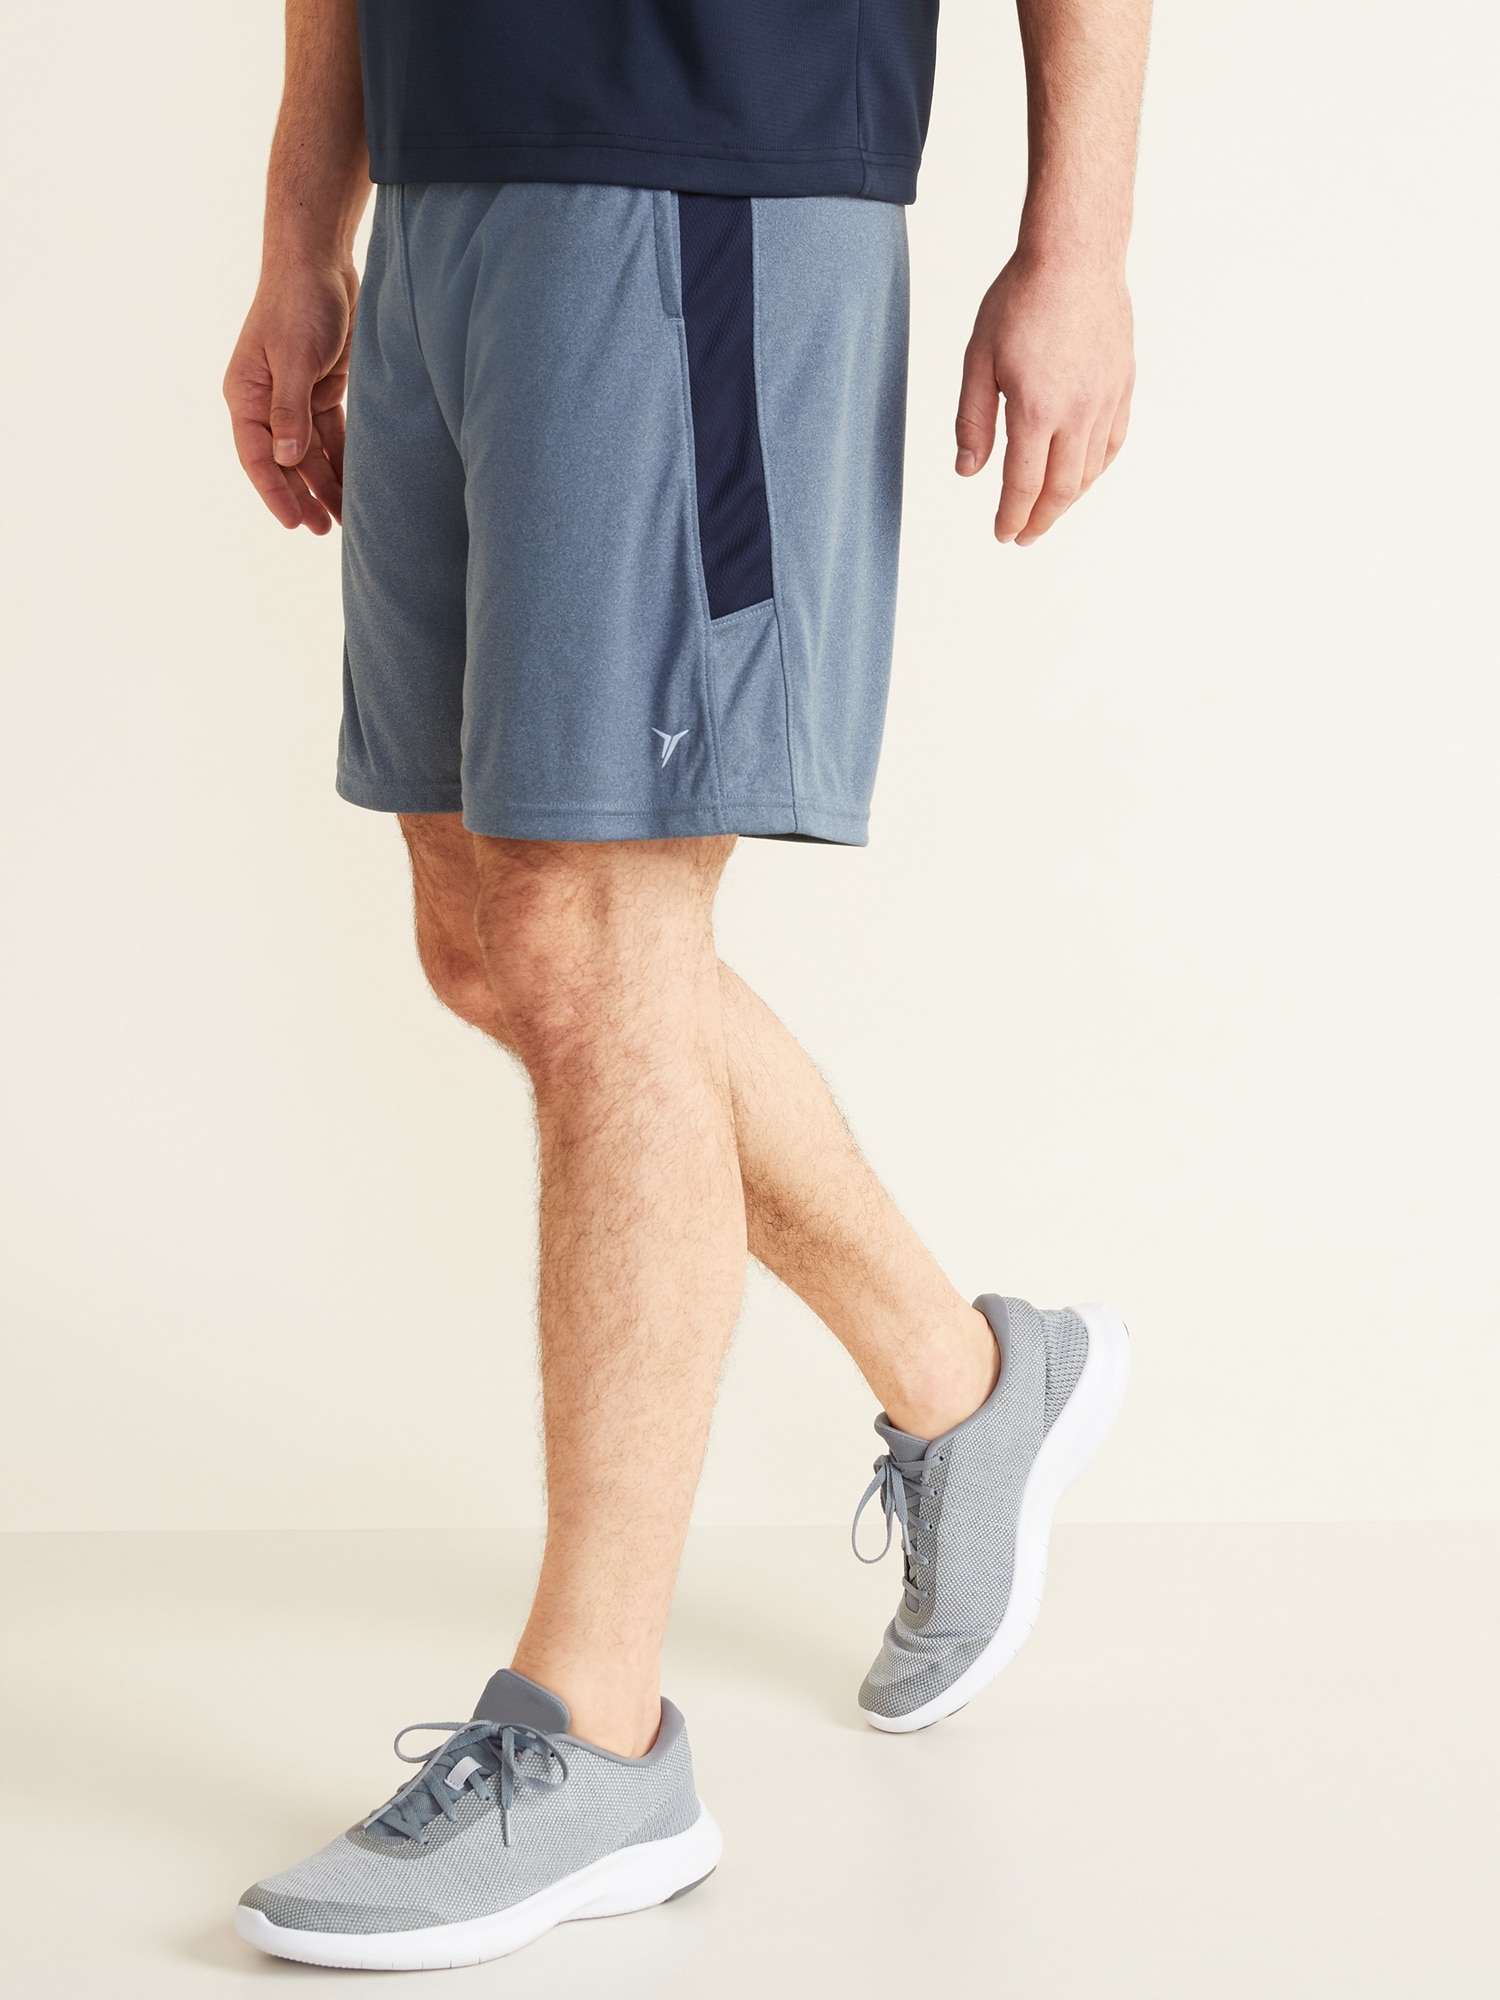 Old Navy Go-Dry Mesh Basketball Shorts for Men - 9-inch inseam